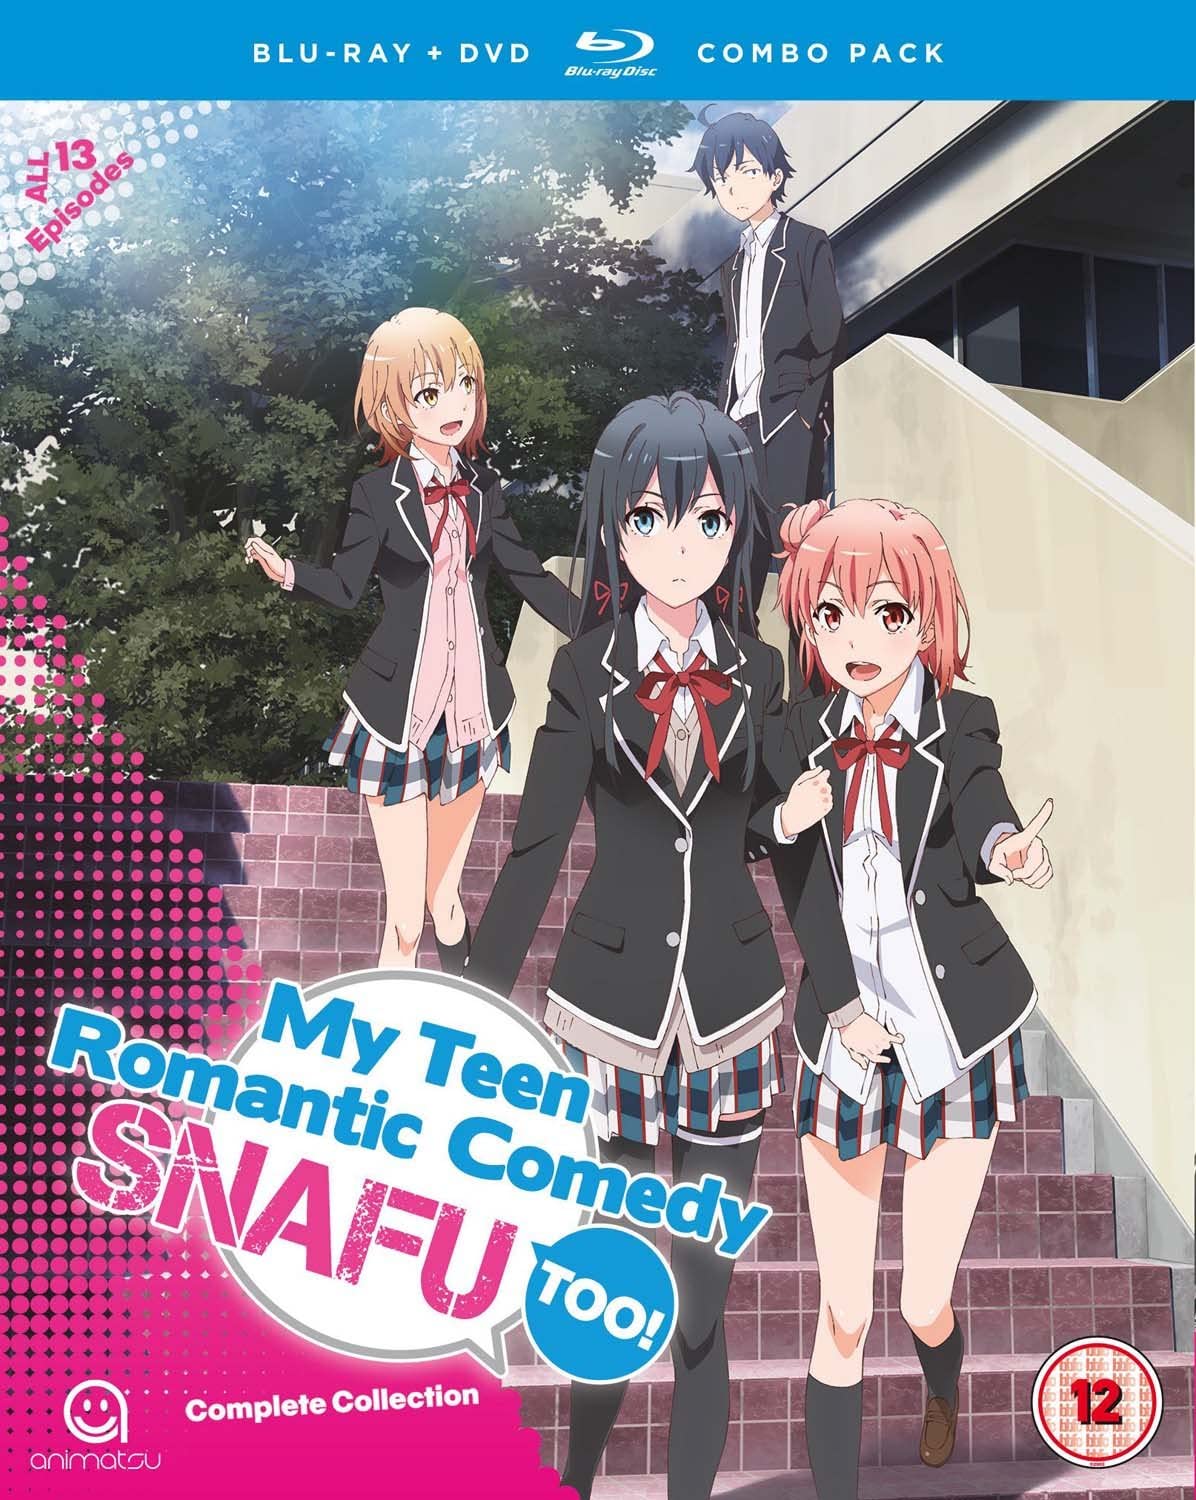 Anime Bluray - My Teen Romantic Comedy SNAFU Too! (Episodes 1-13)  Blu-ray/DVD Combo